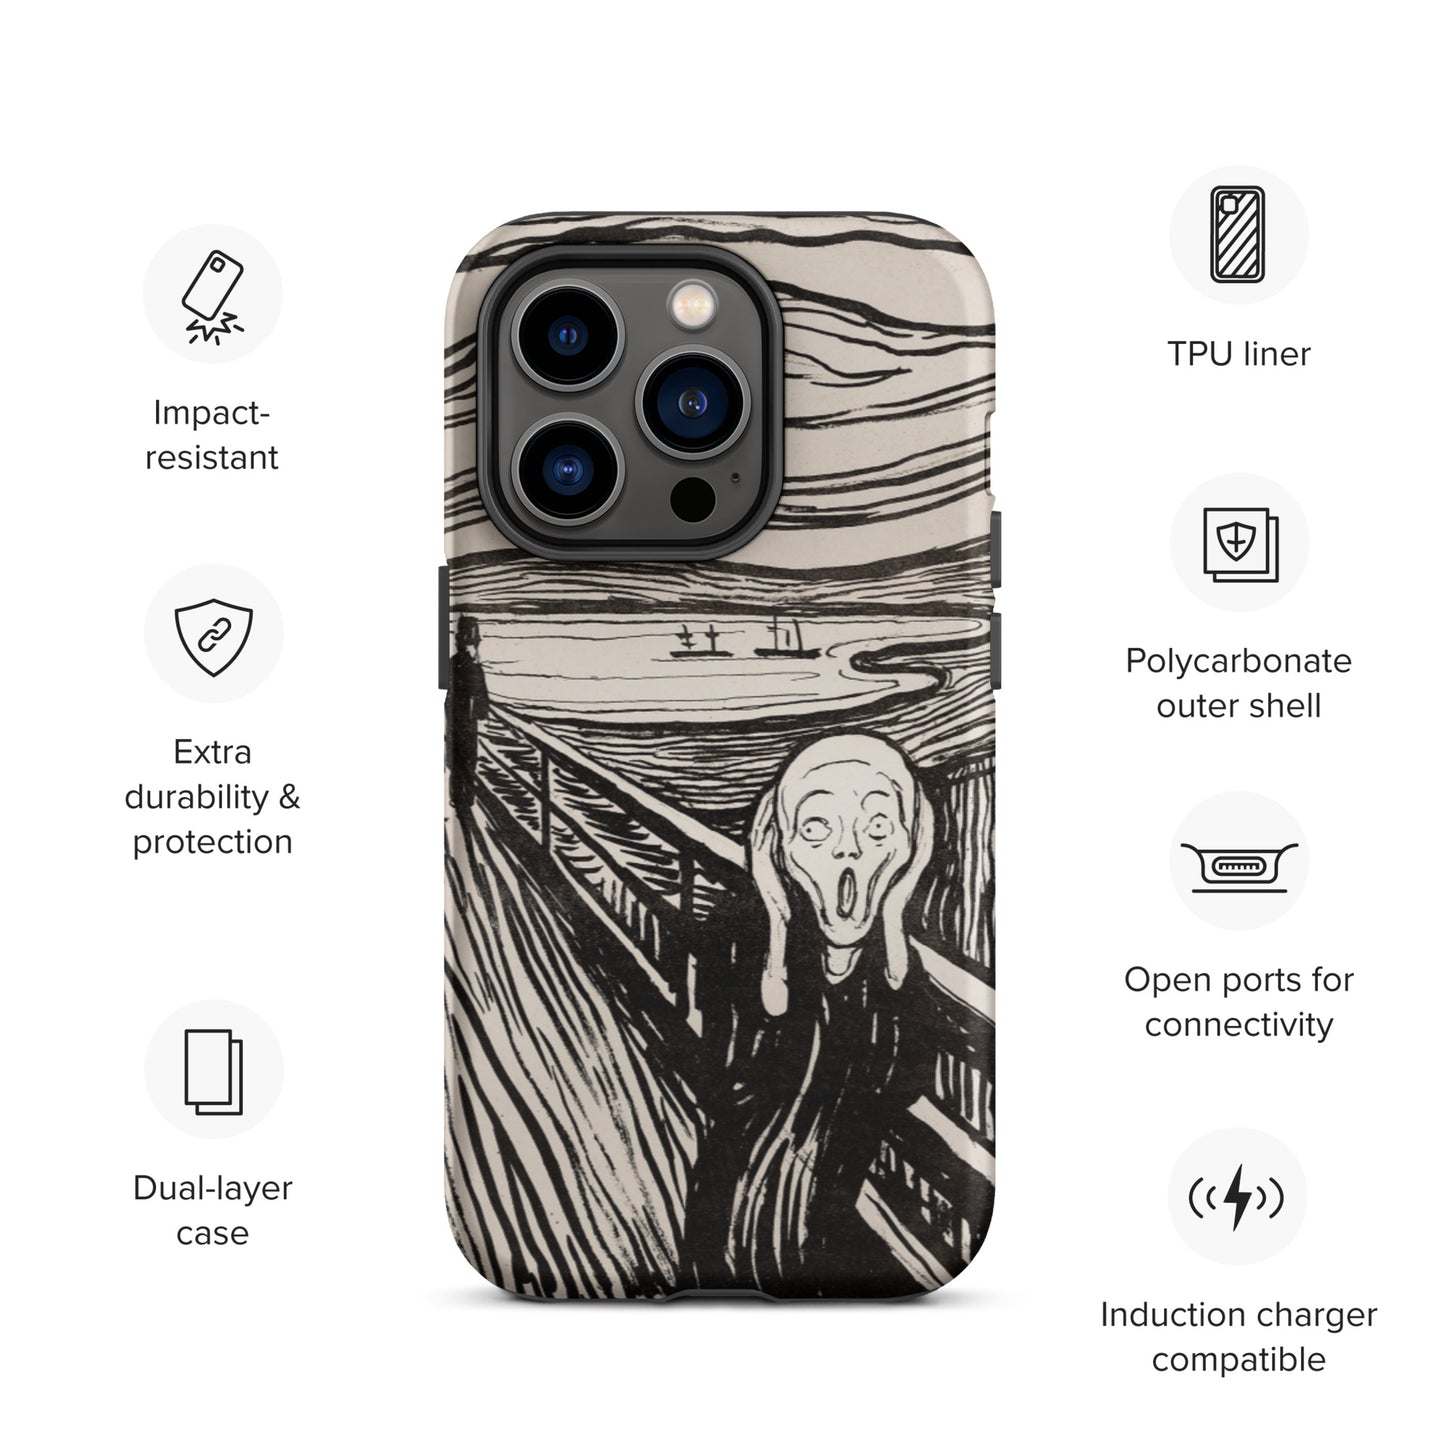 Scream - Tough iPhone case